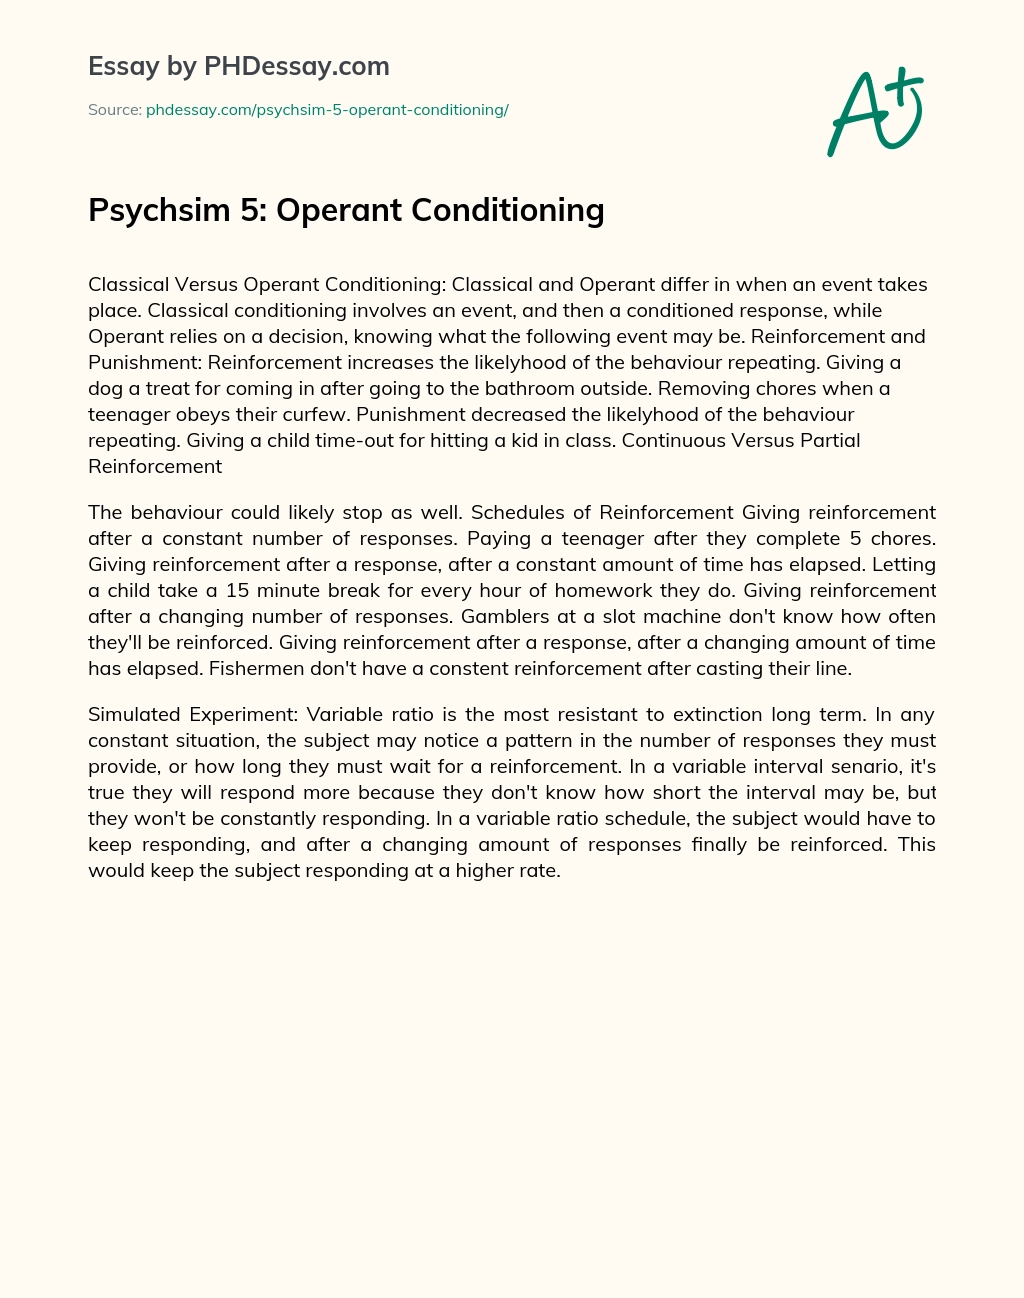 Psychsim 5: Operant Conditioning essay